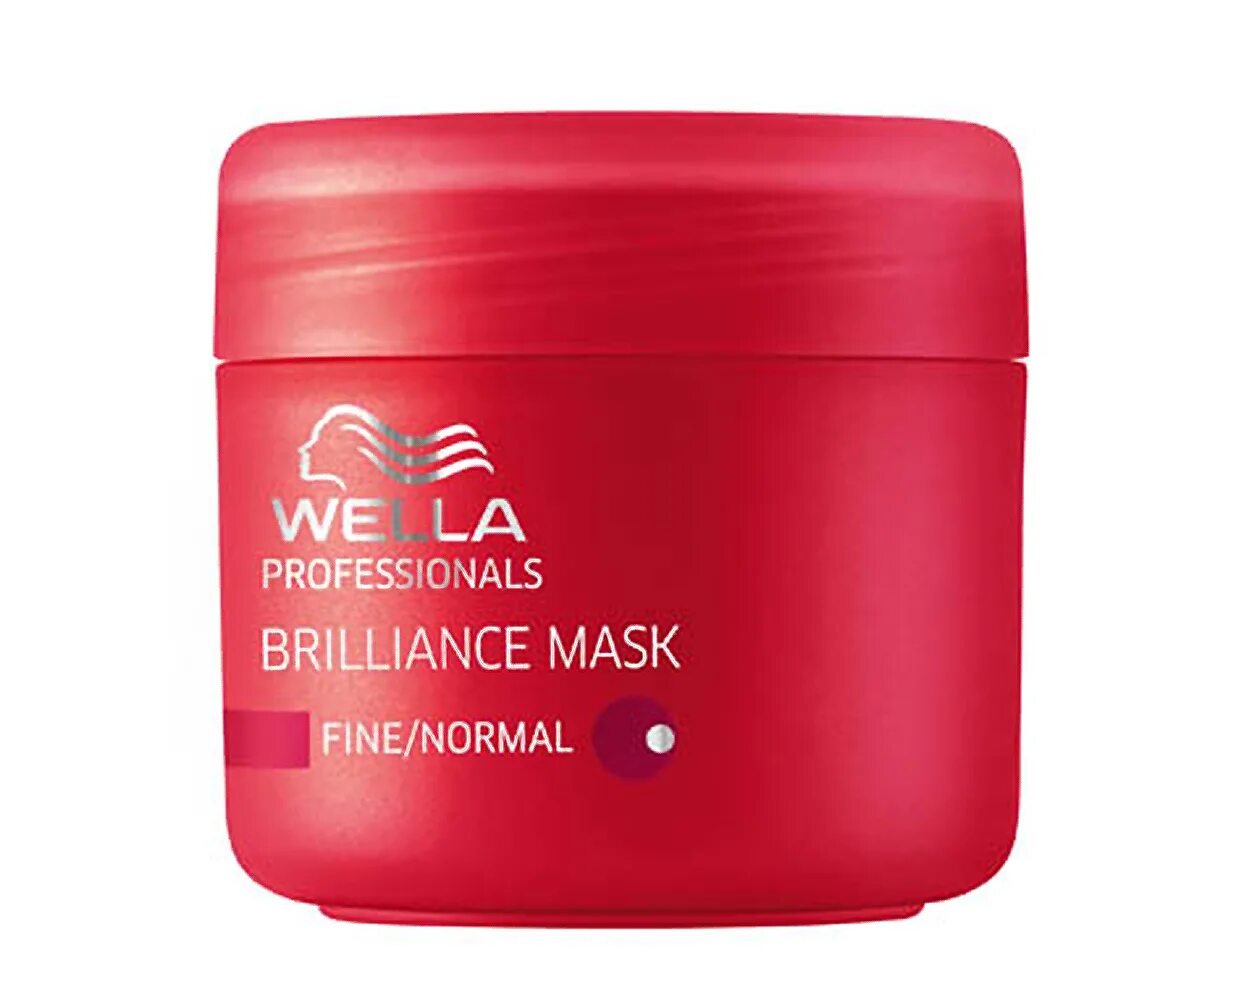 Wella Brilliance маска 150 ml. Велла брилианс для окрашенных волос маска. Wella Invigo Brilliance Fine Mask. Wella маска красная. Увлажняющие маски для окрашенных волос